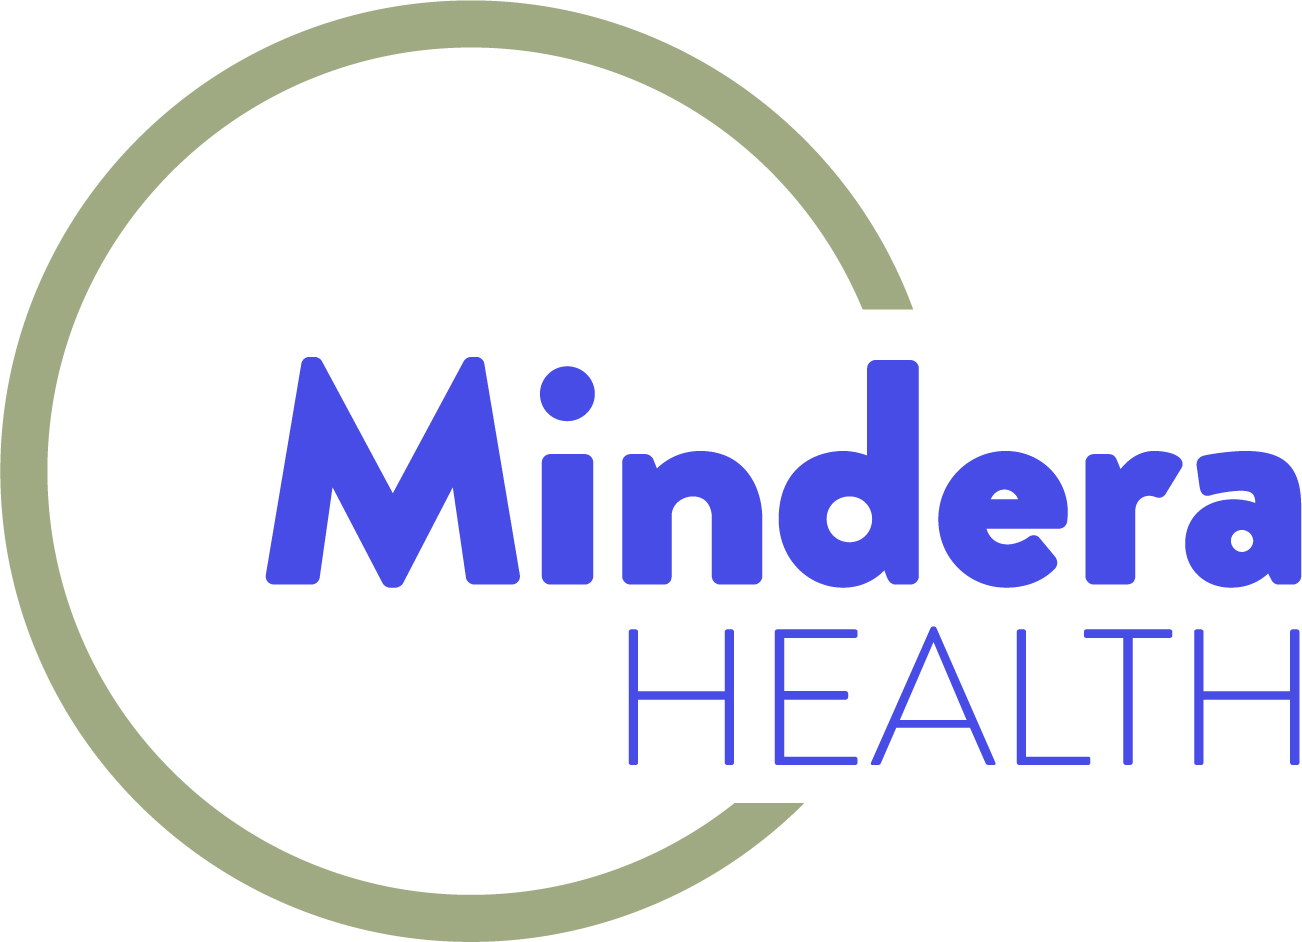 Mindera Health